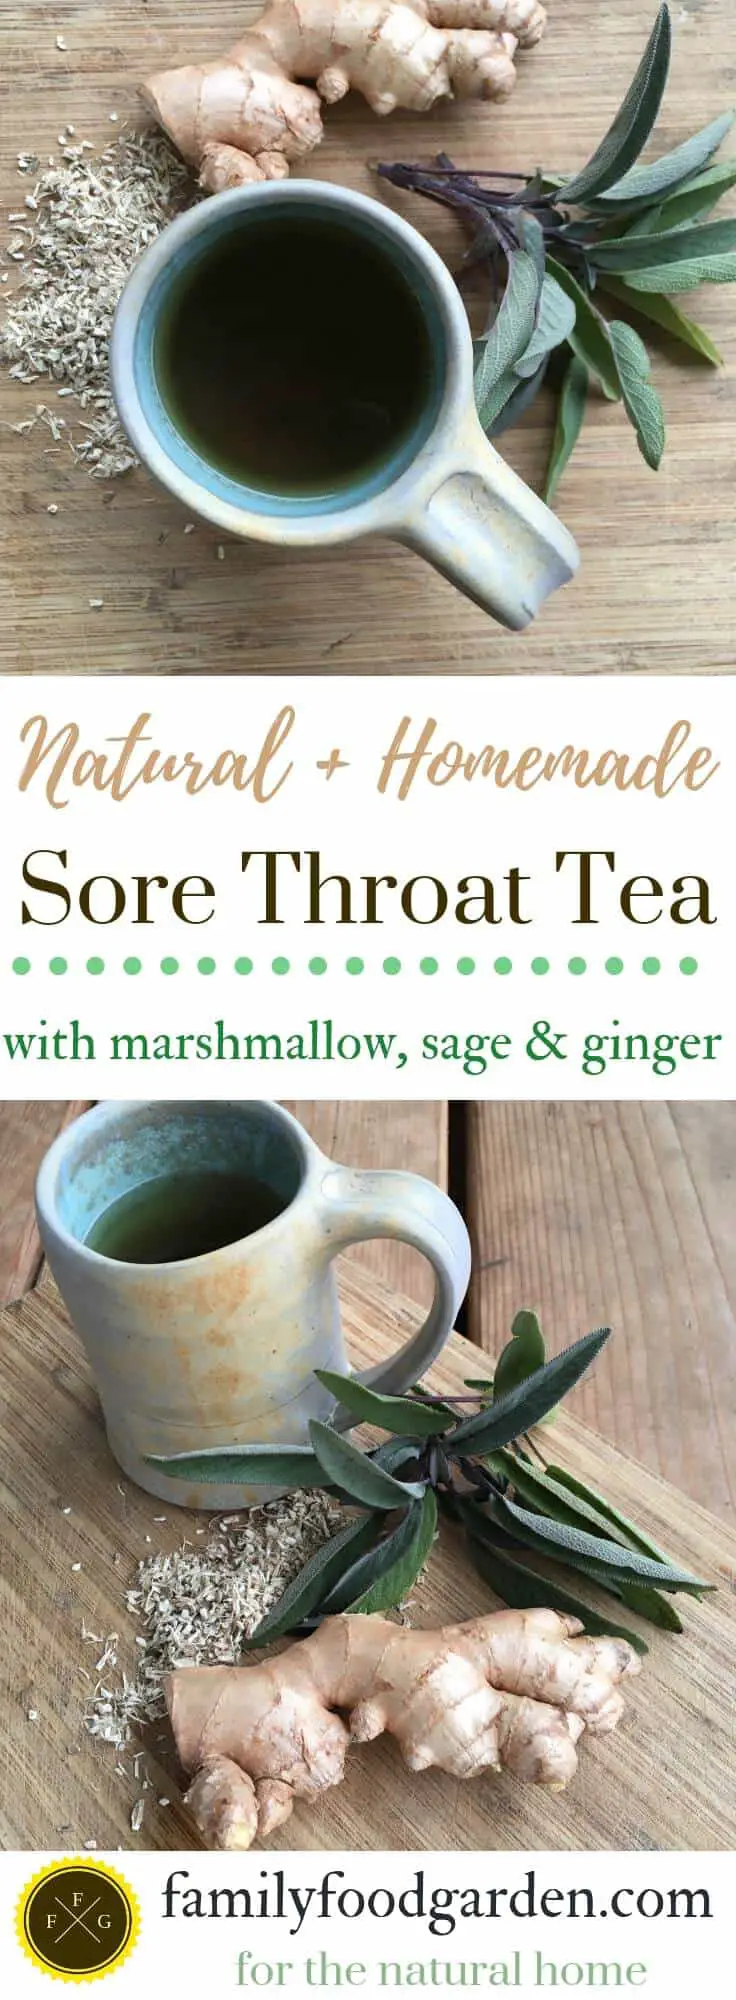 Sore throat tea recipe #herbalism #herbalremedies #herbs #herbaltea #tea #hergardening #naturalremedies #sorethroat